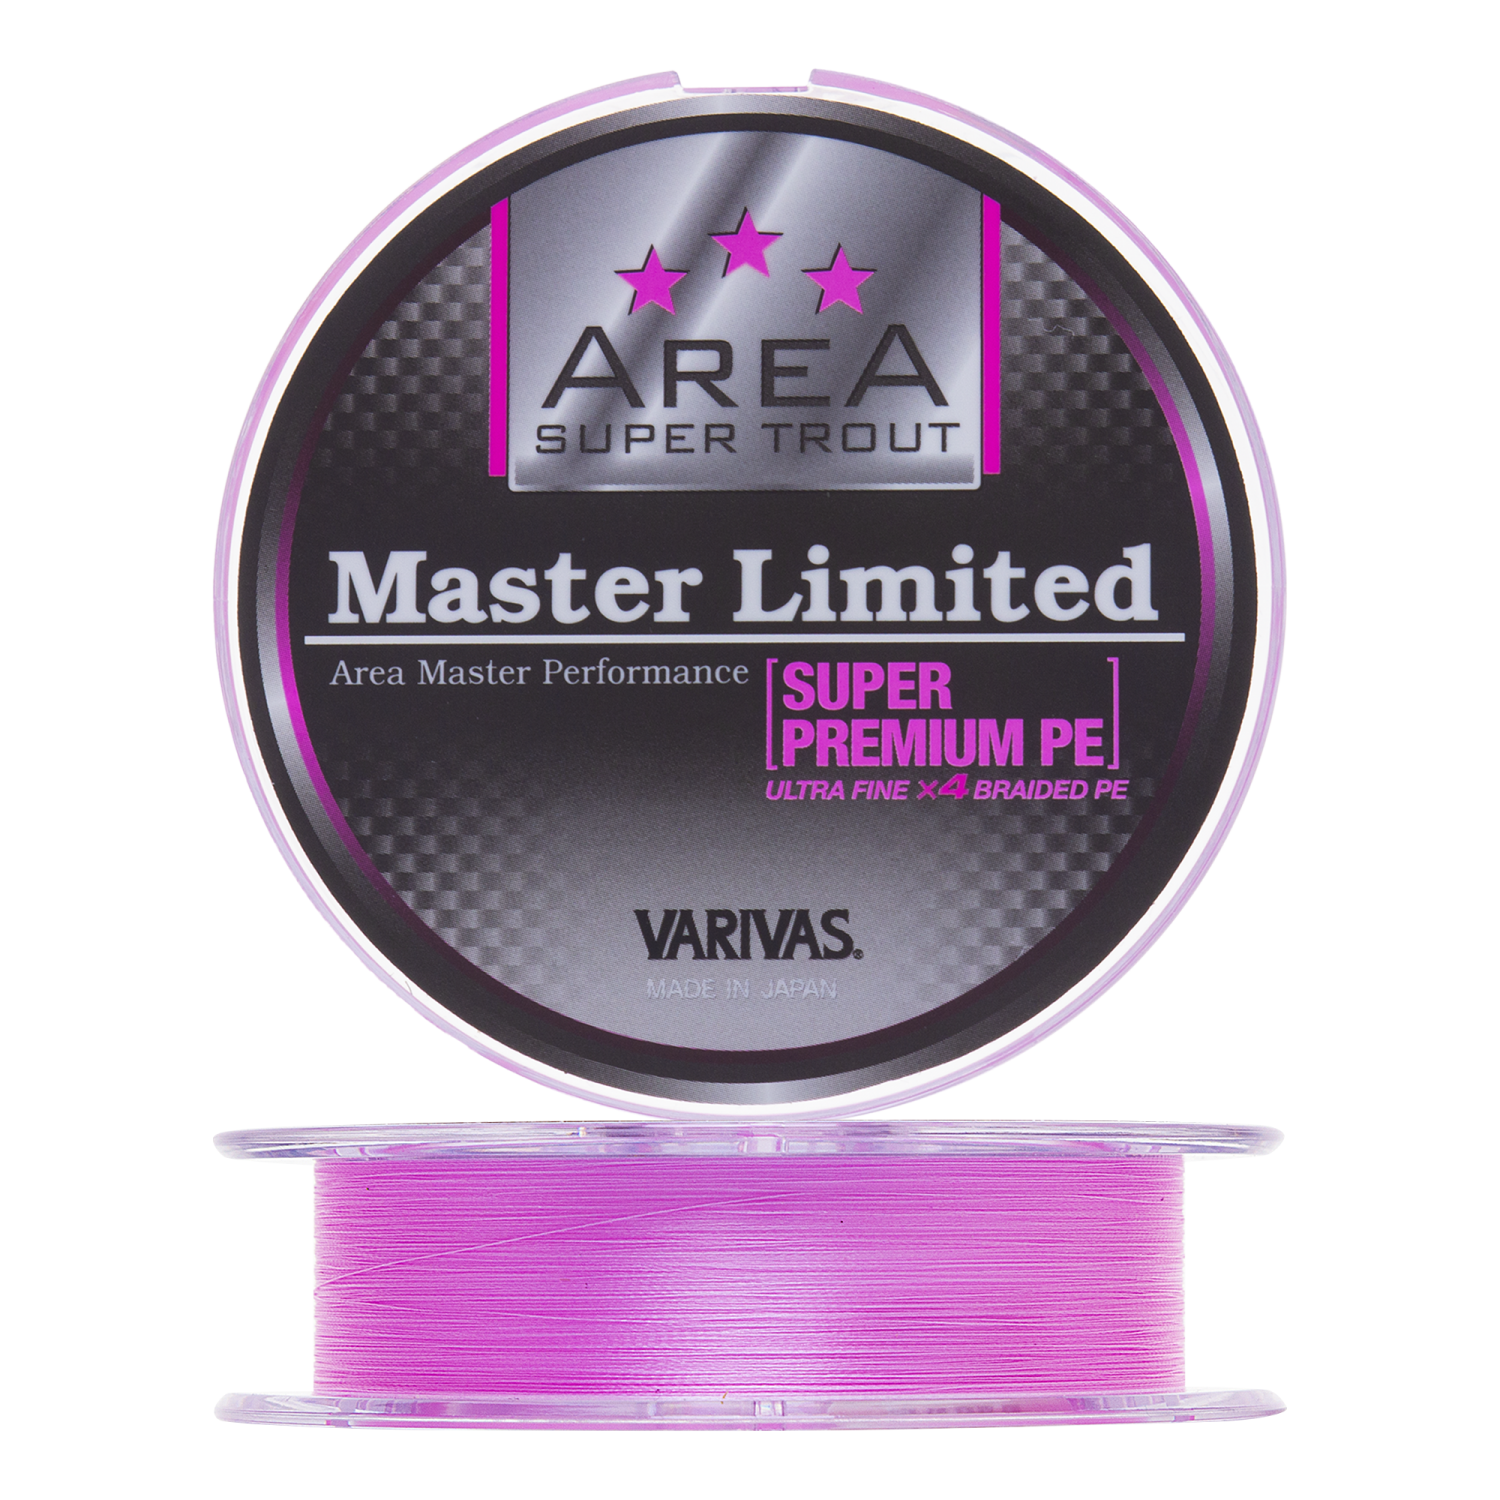 Шнур плетеный Varivas Area Super Trout Master Limited Super Premium PE X4 #0,2 0,074мм 75м (pink)